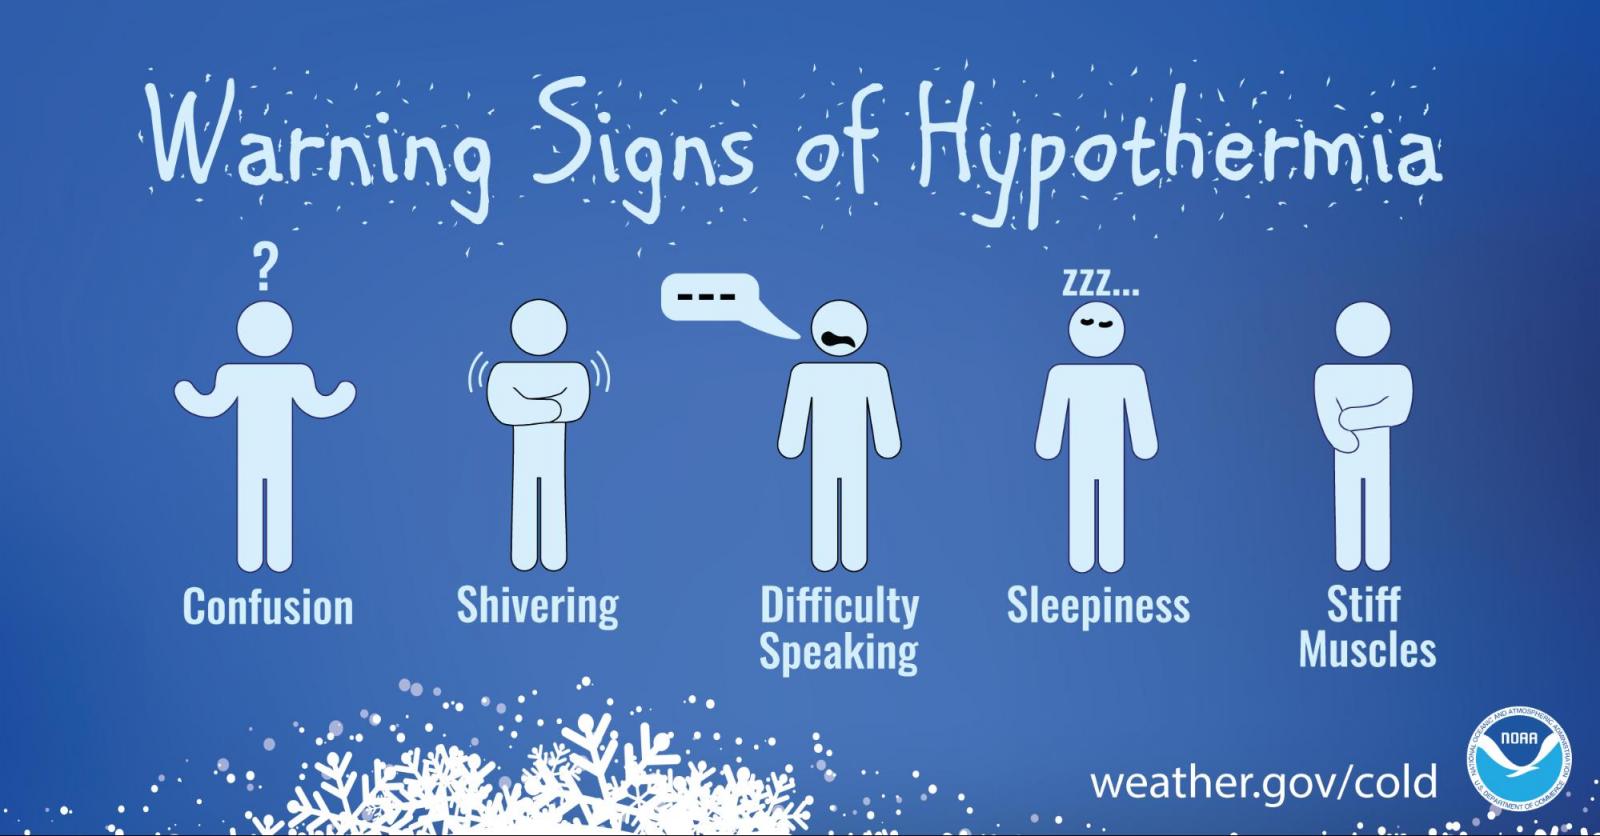 Cold - Hypothermia Information